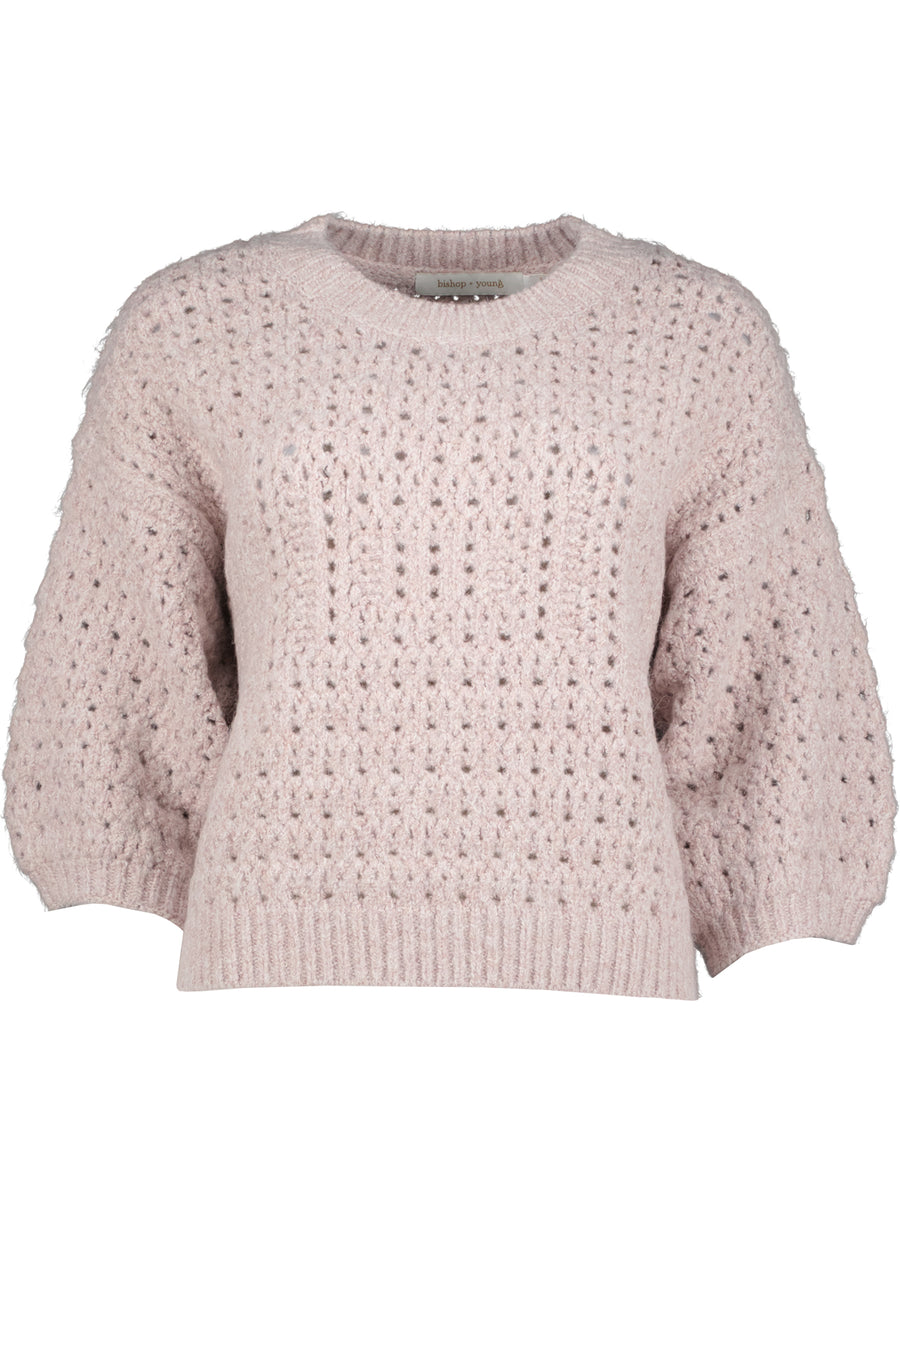 St Germain Sweater